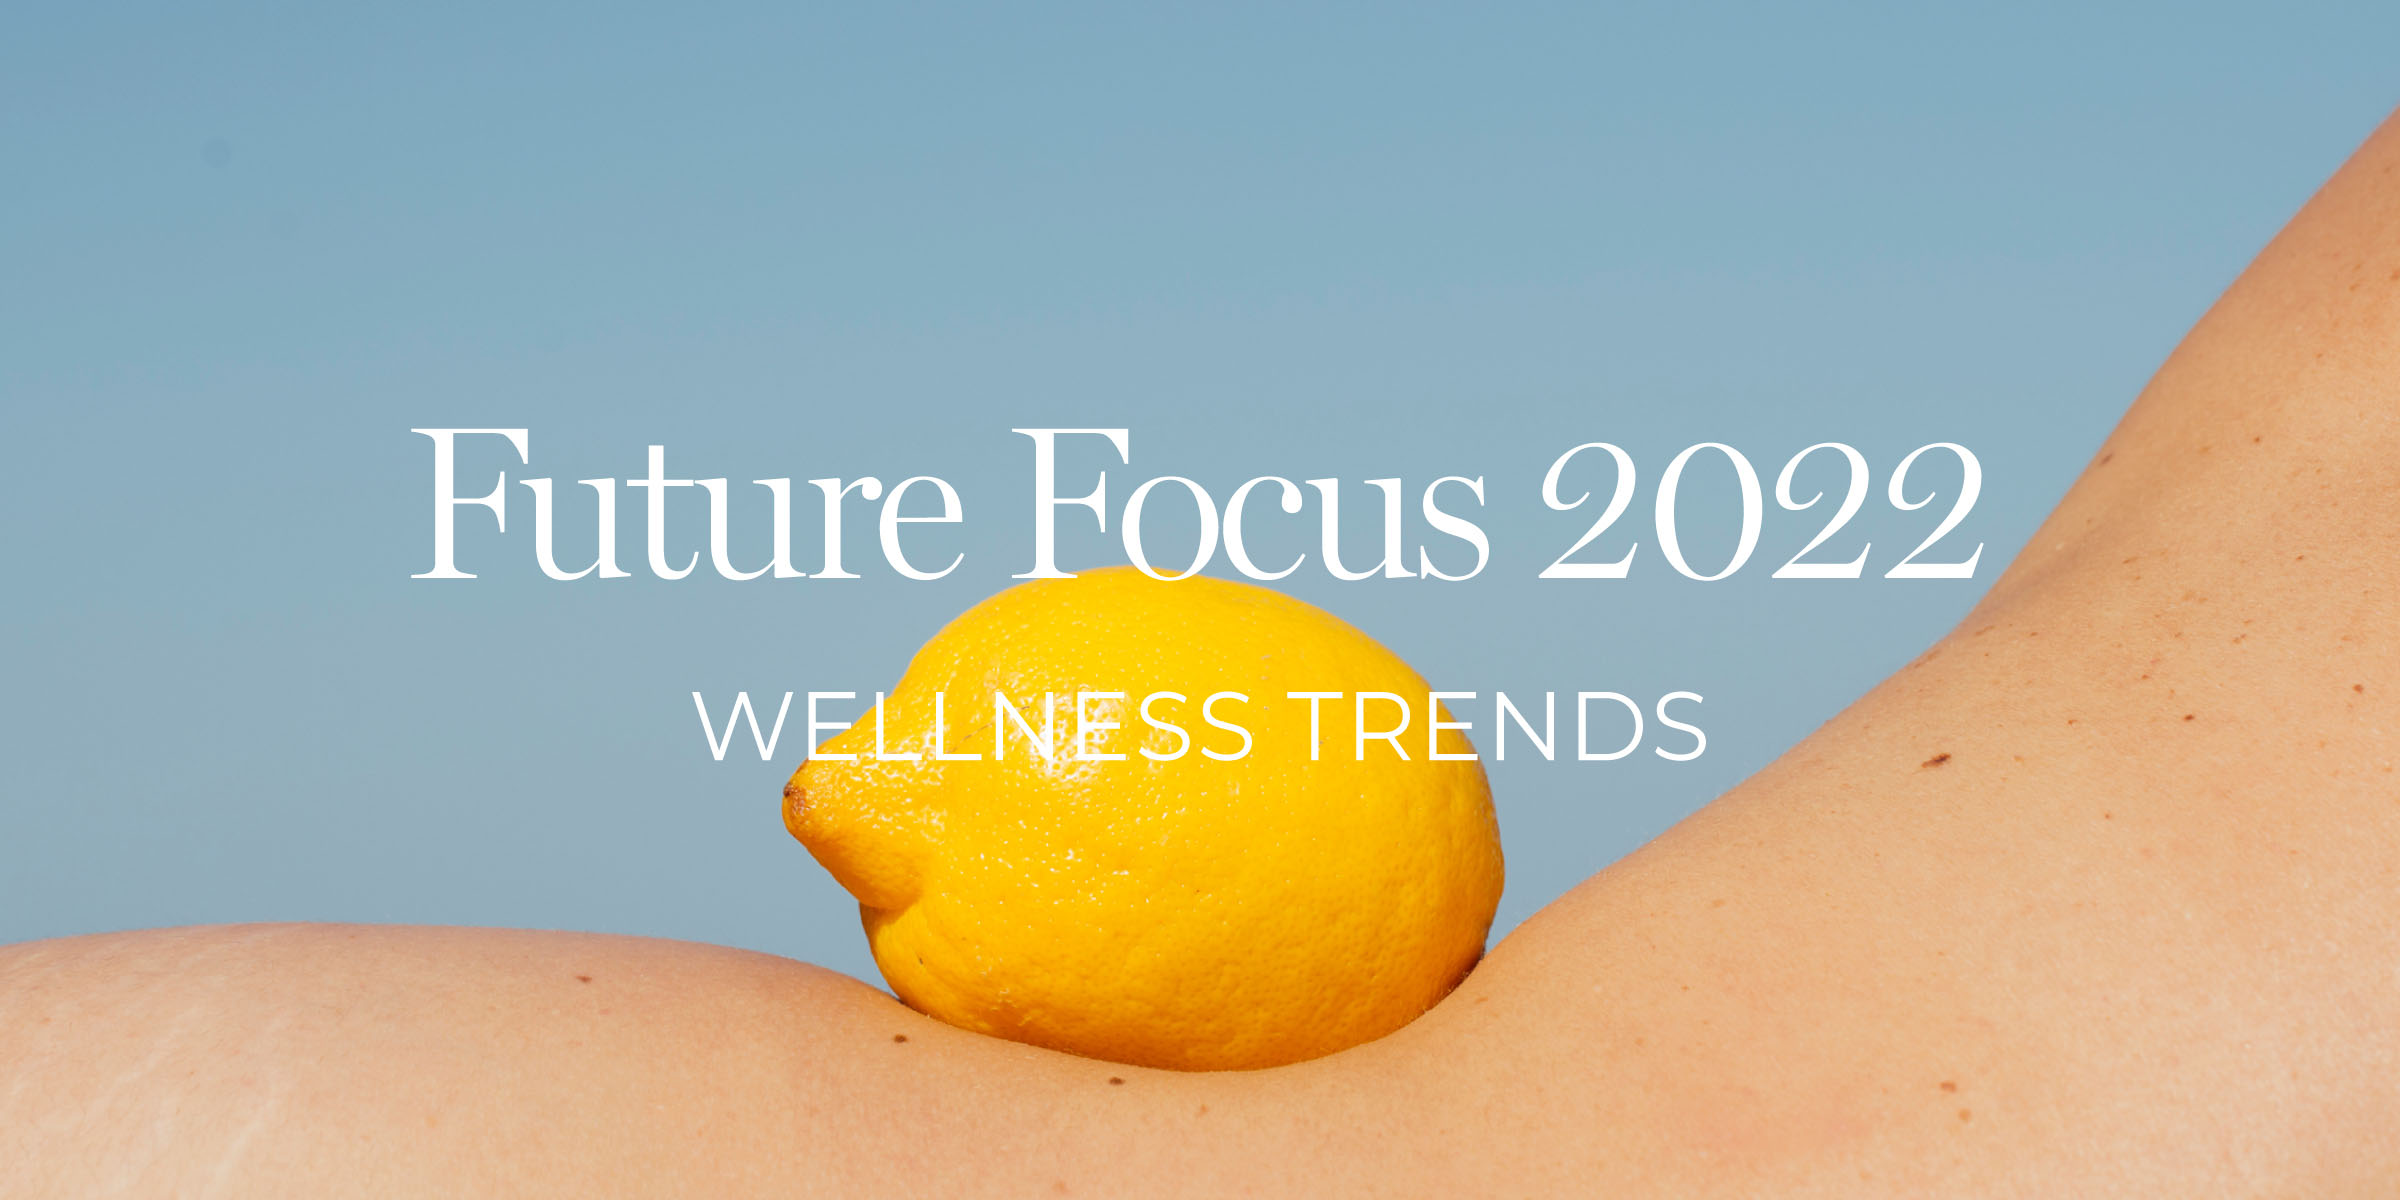 Future Focus 2022 - Wellness Trends